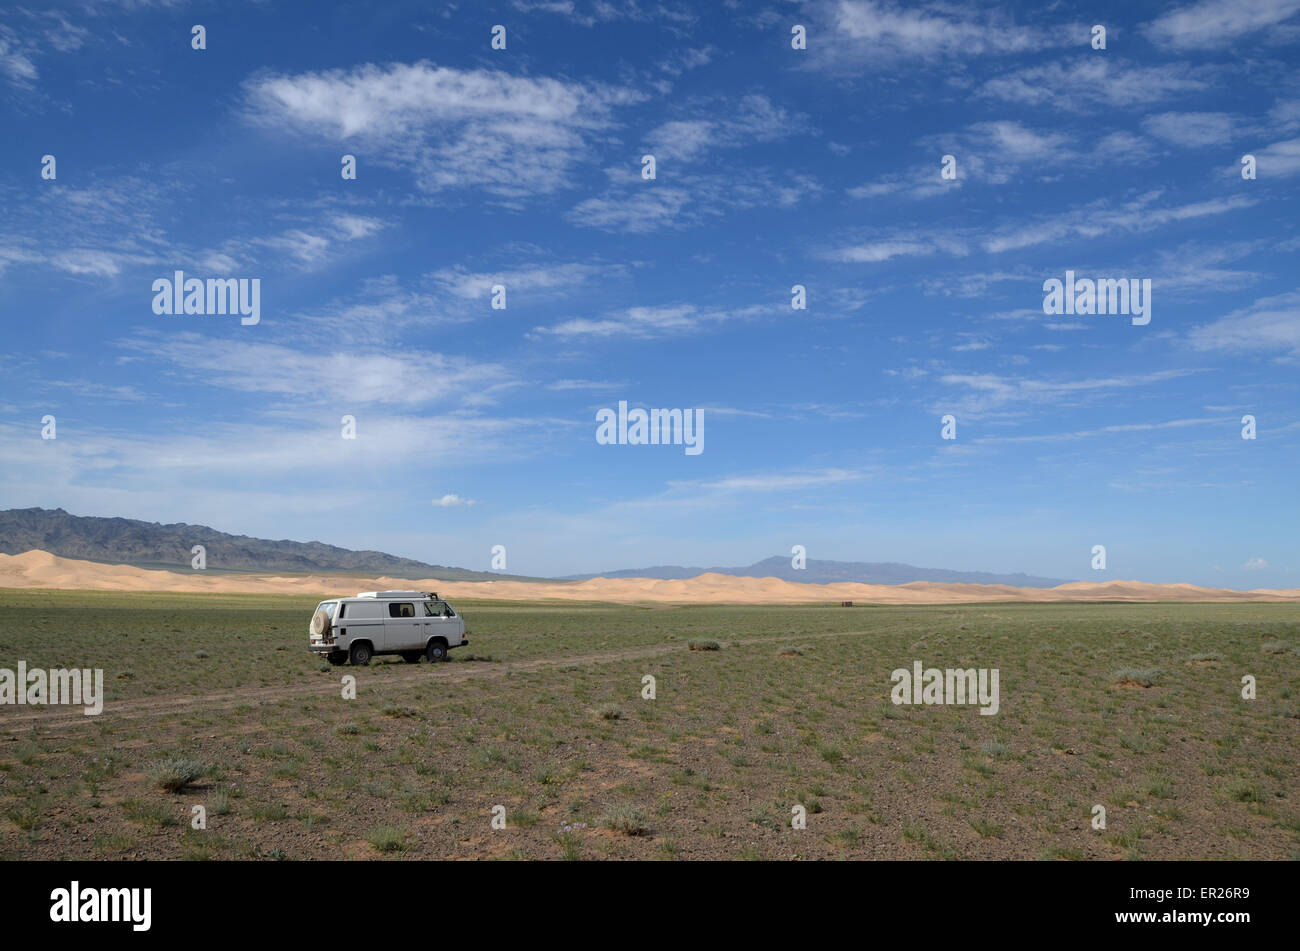 My car before the Khongoryn sand dunes in the Gobi desert, Omnogovi province, Mongolia. Stock Photo